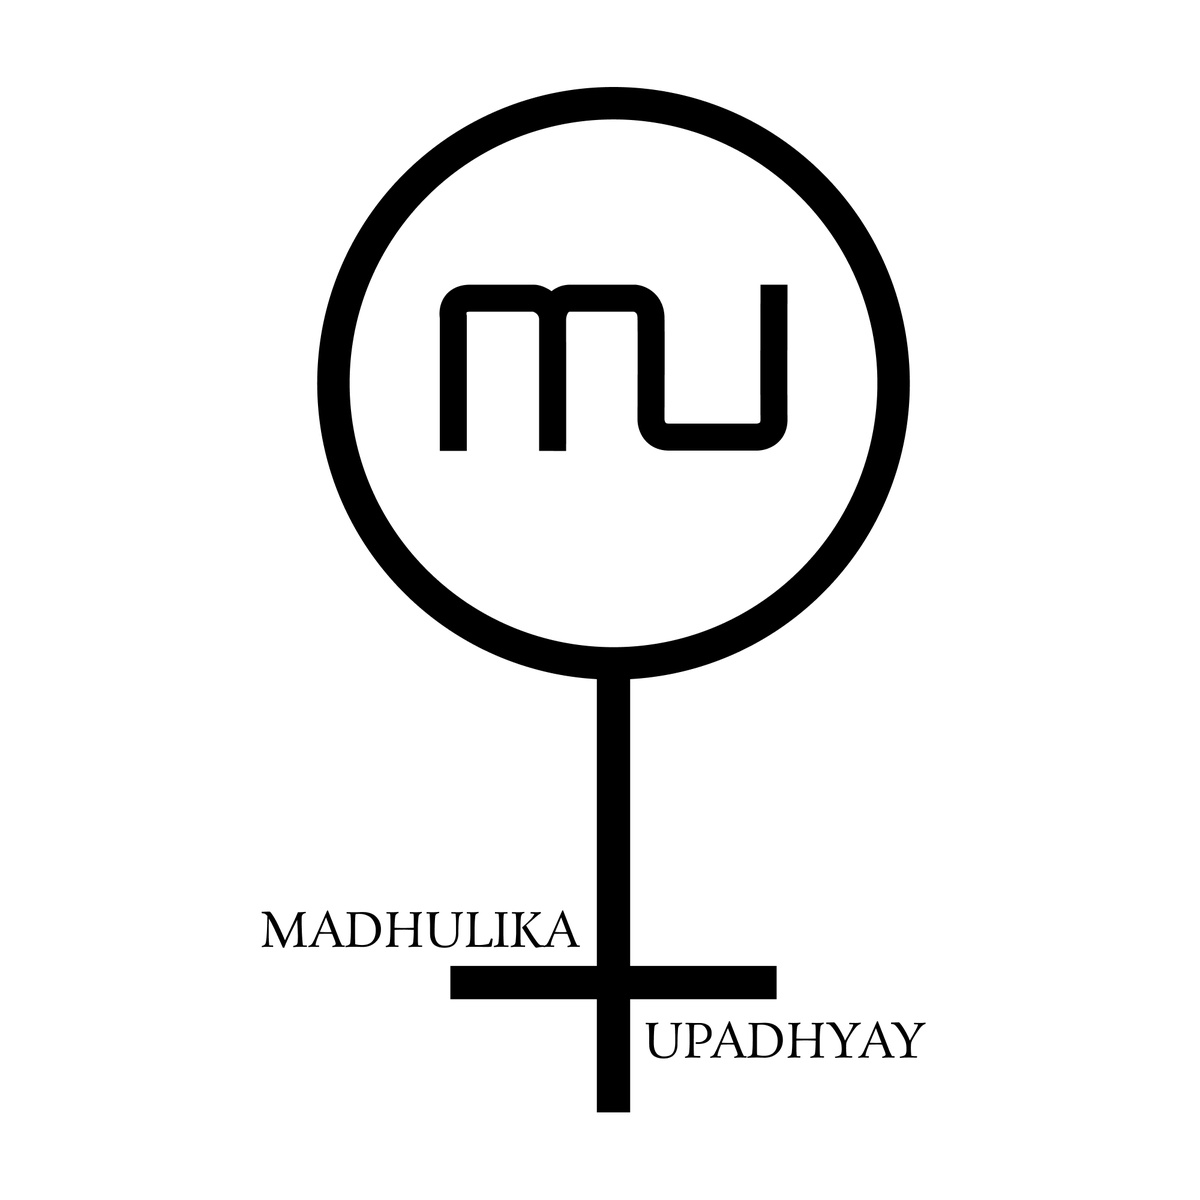 Madhulika Upadhyay Services In Delhi